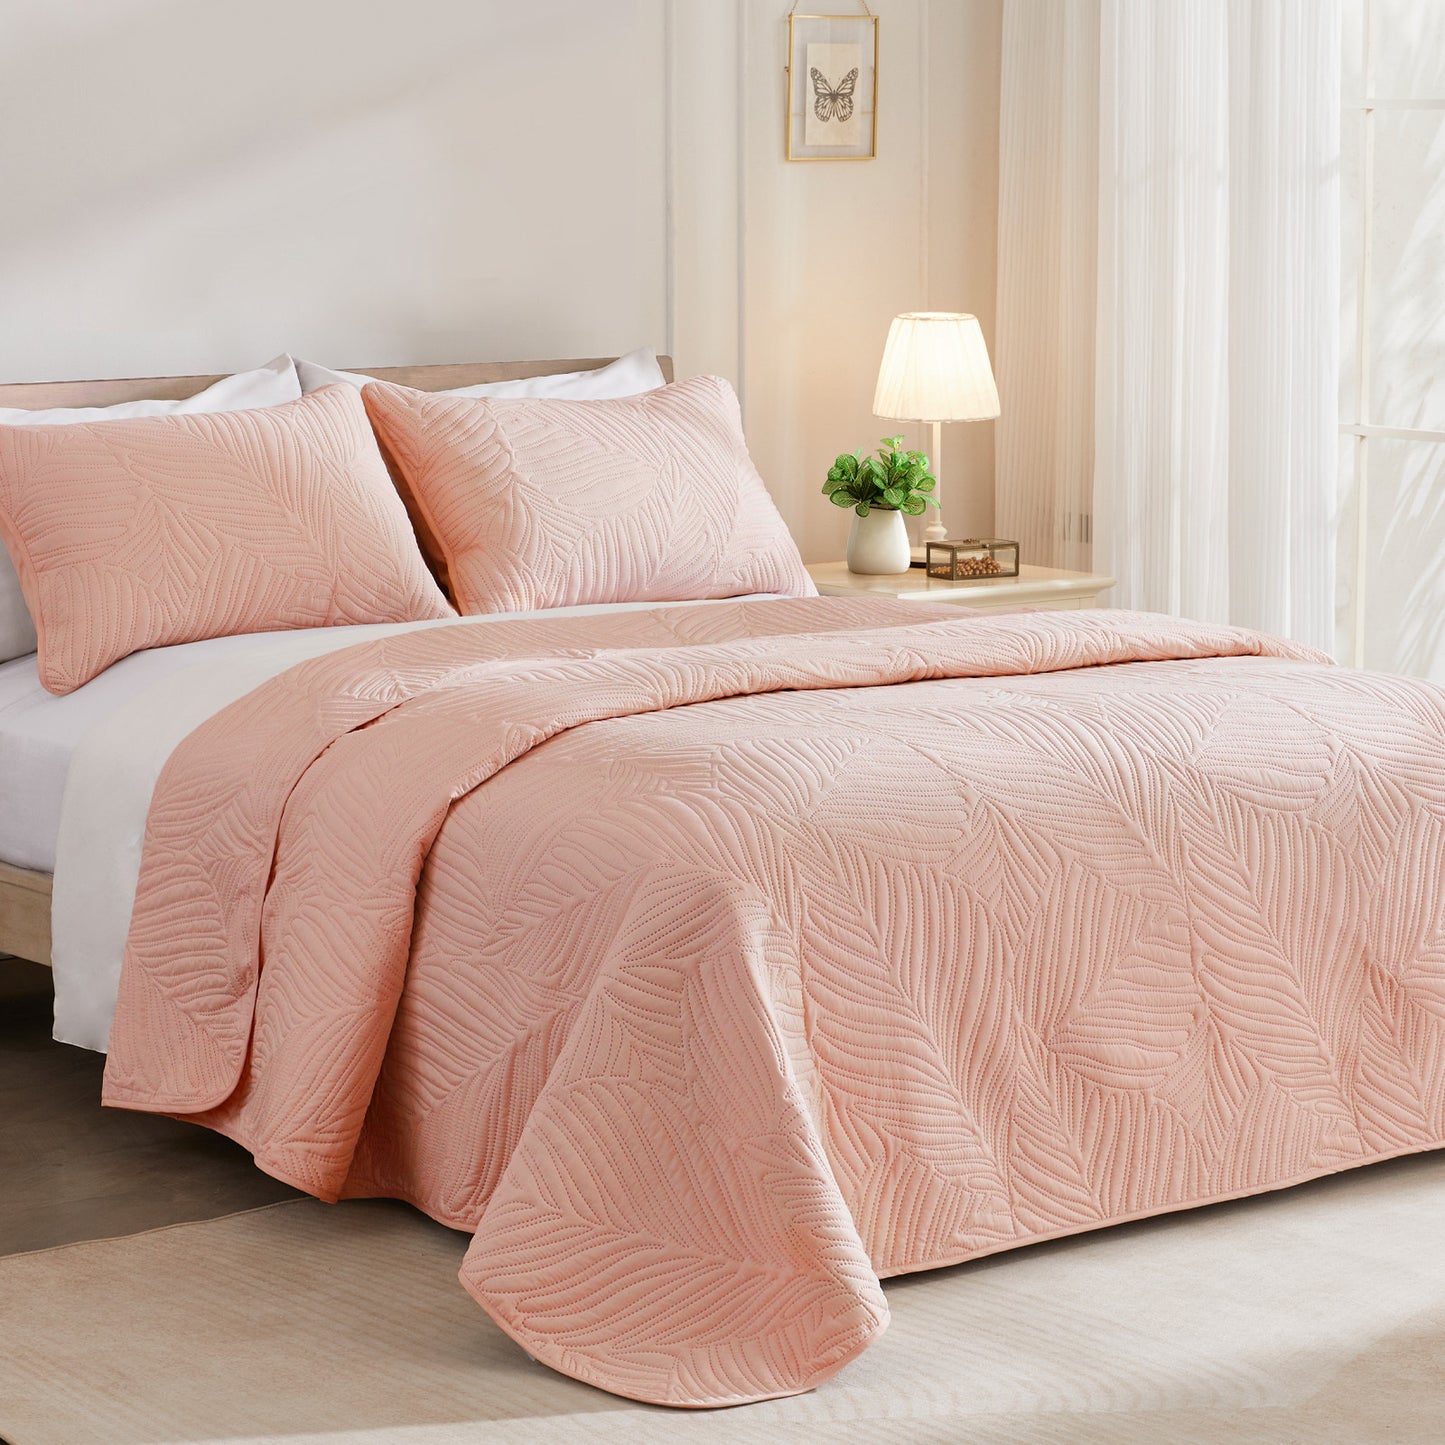 Exclusivo Mezcla California King Quilt Set Blush Pink, Lightweight Bedspread Leaf Pattern Bed Cover Soft Coverlet Bedding Set(1 Quilt, 2 Pillow Shams)